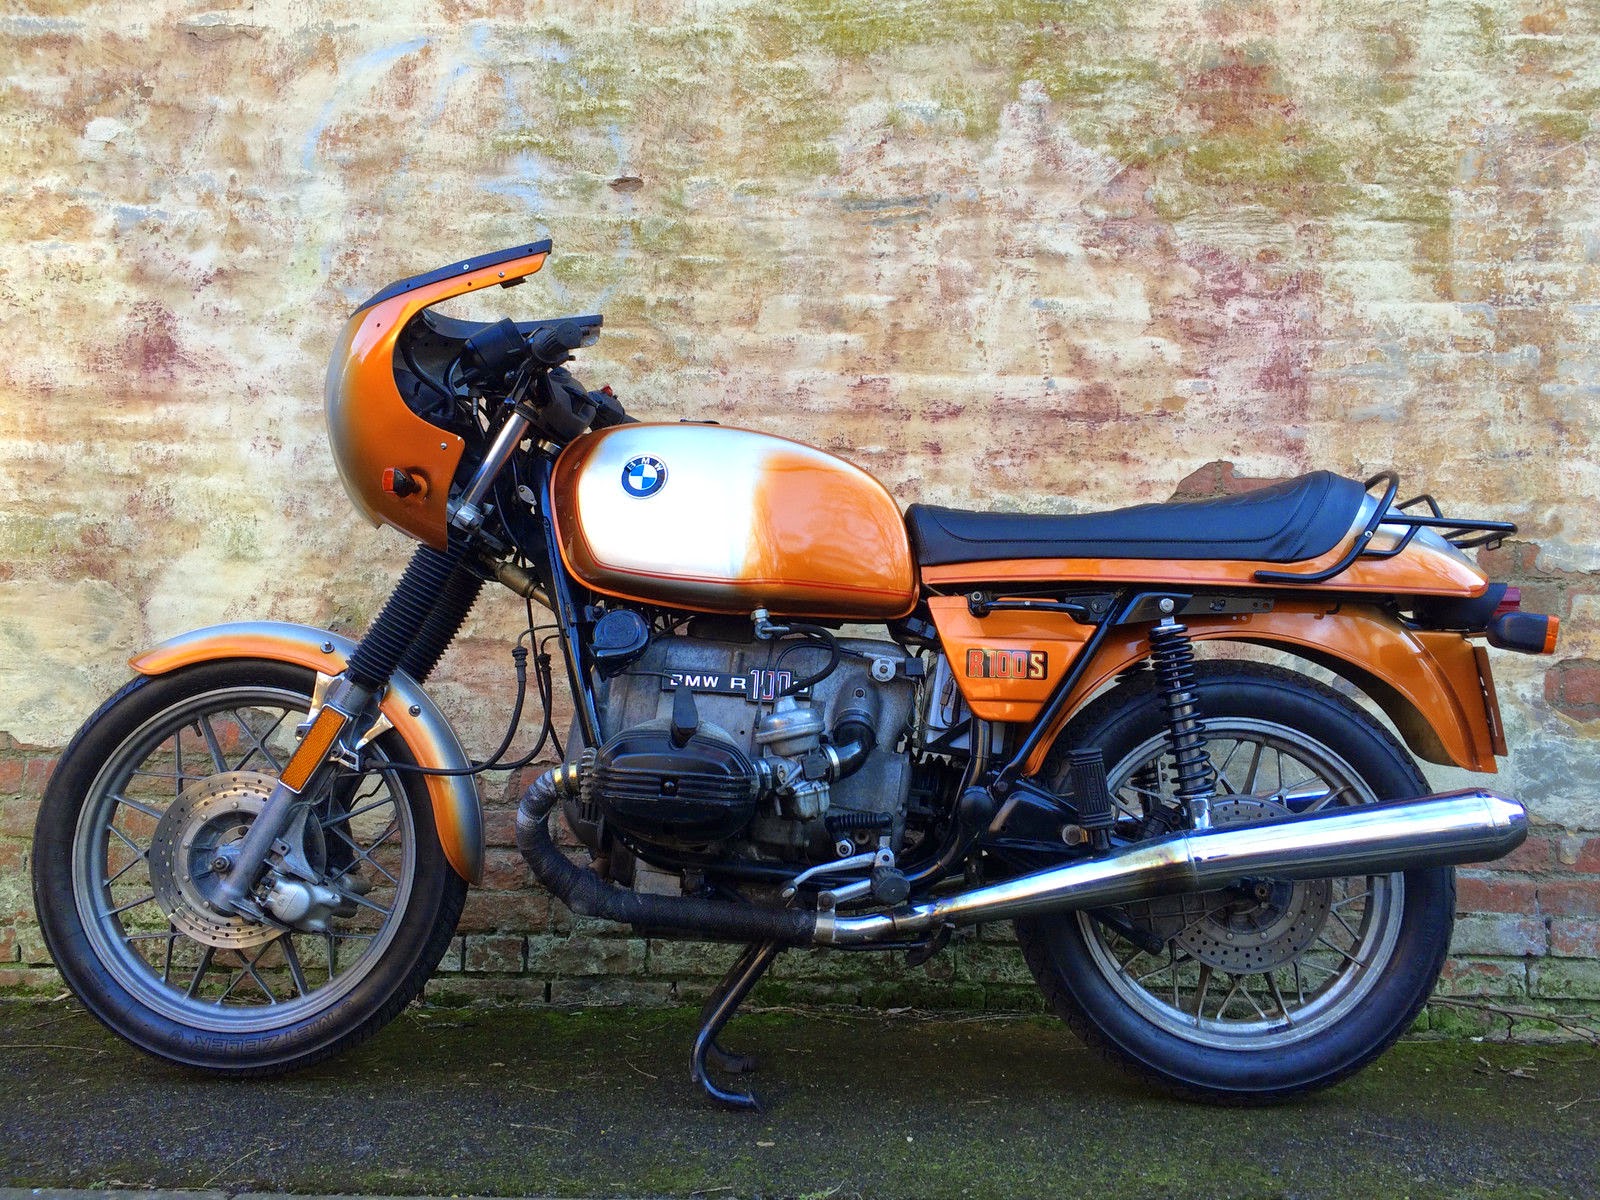 Motorcycle Restoration Projects UK: February 2015